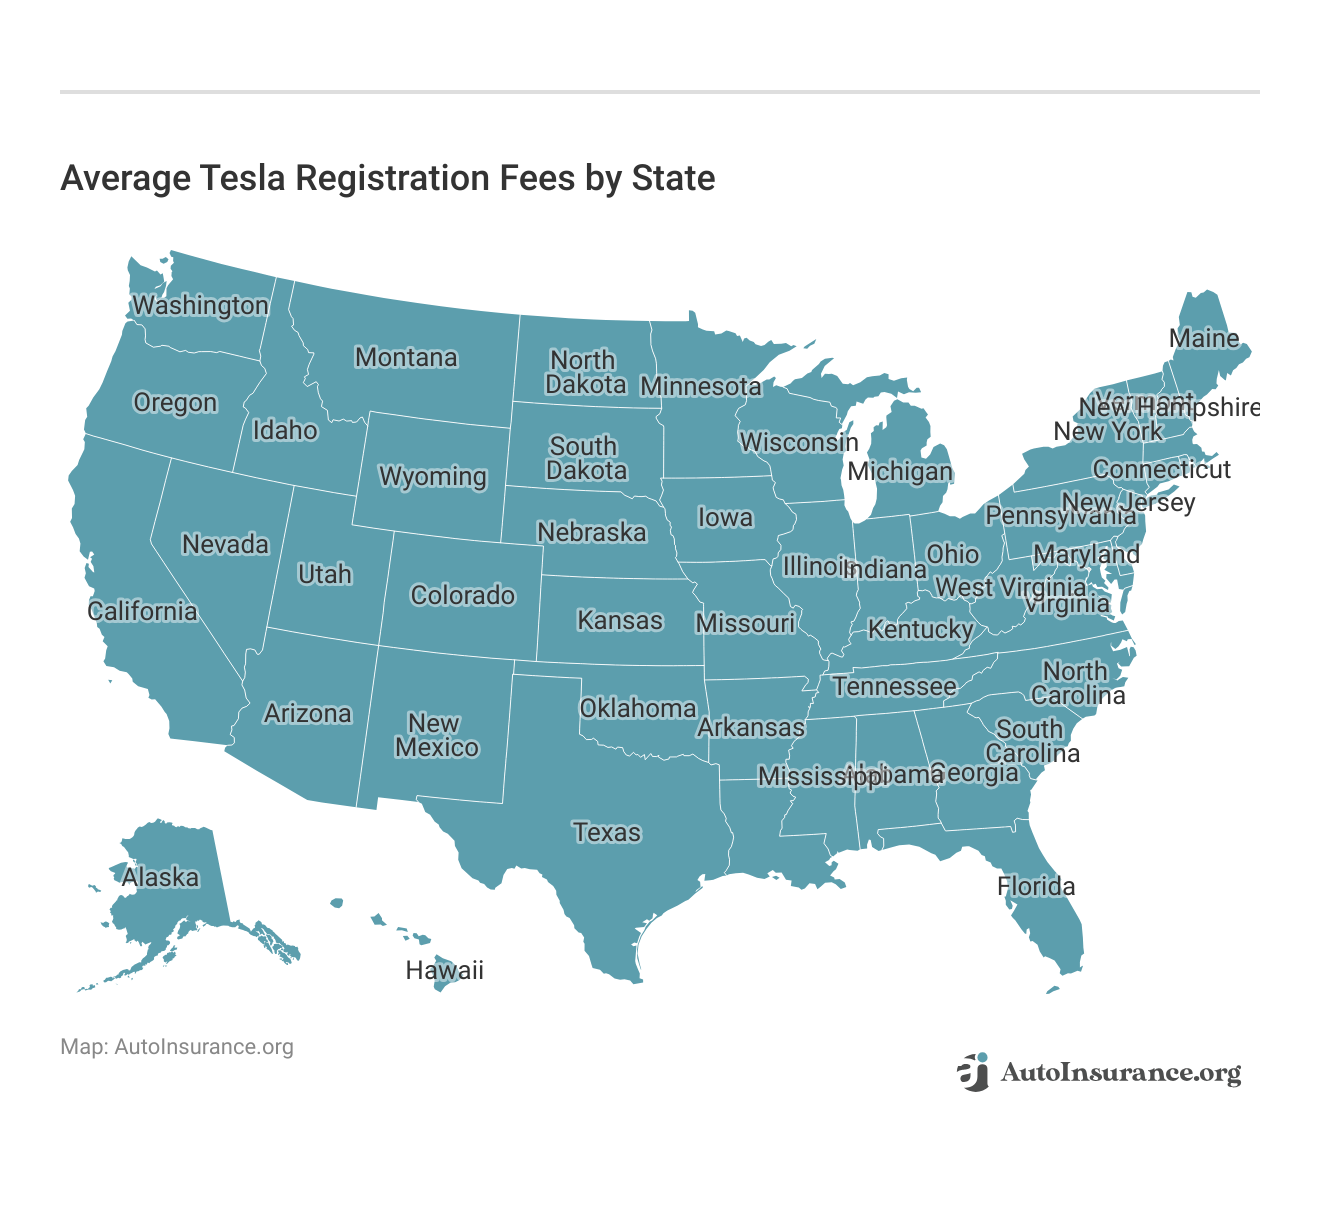 <h3>Average Tesla Registration Fees by State</h3>